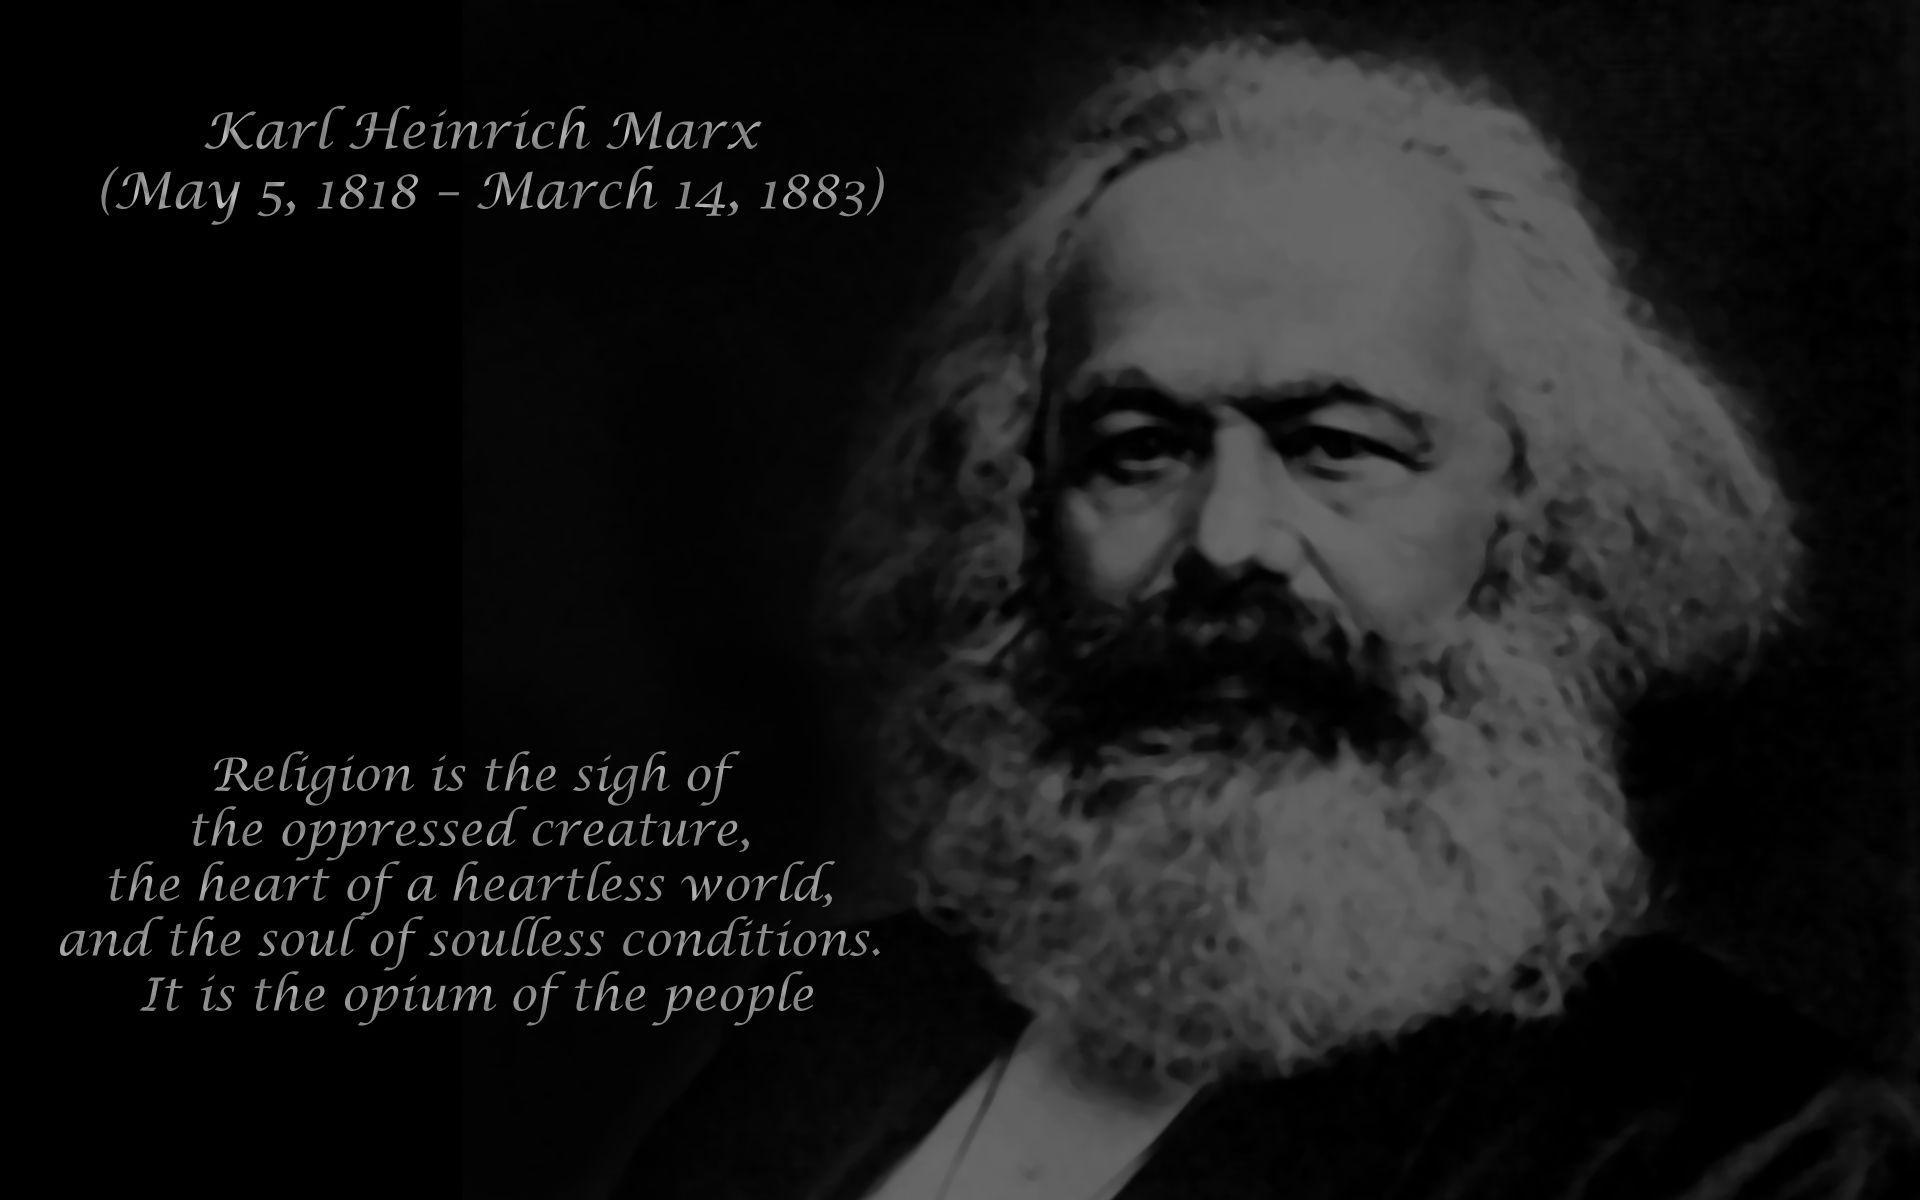 Karl Marx wallpapers